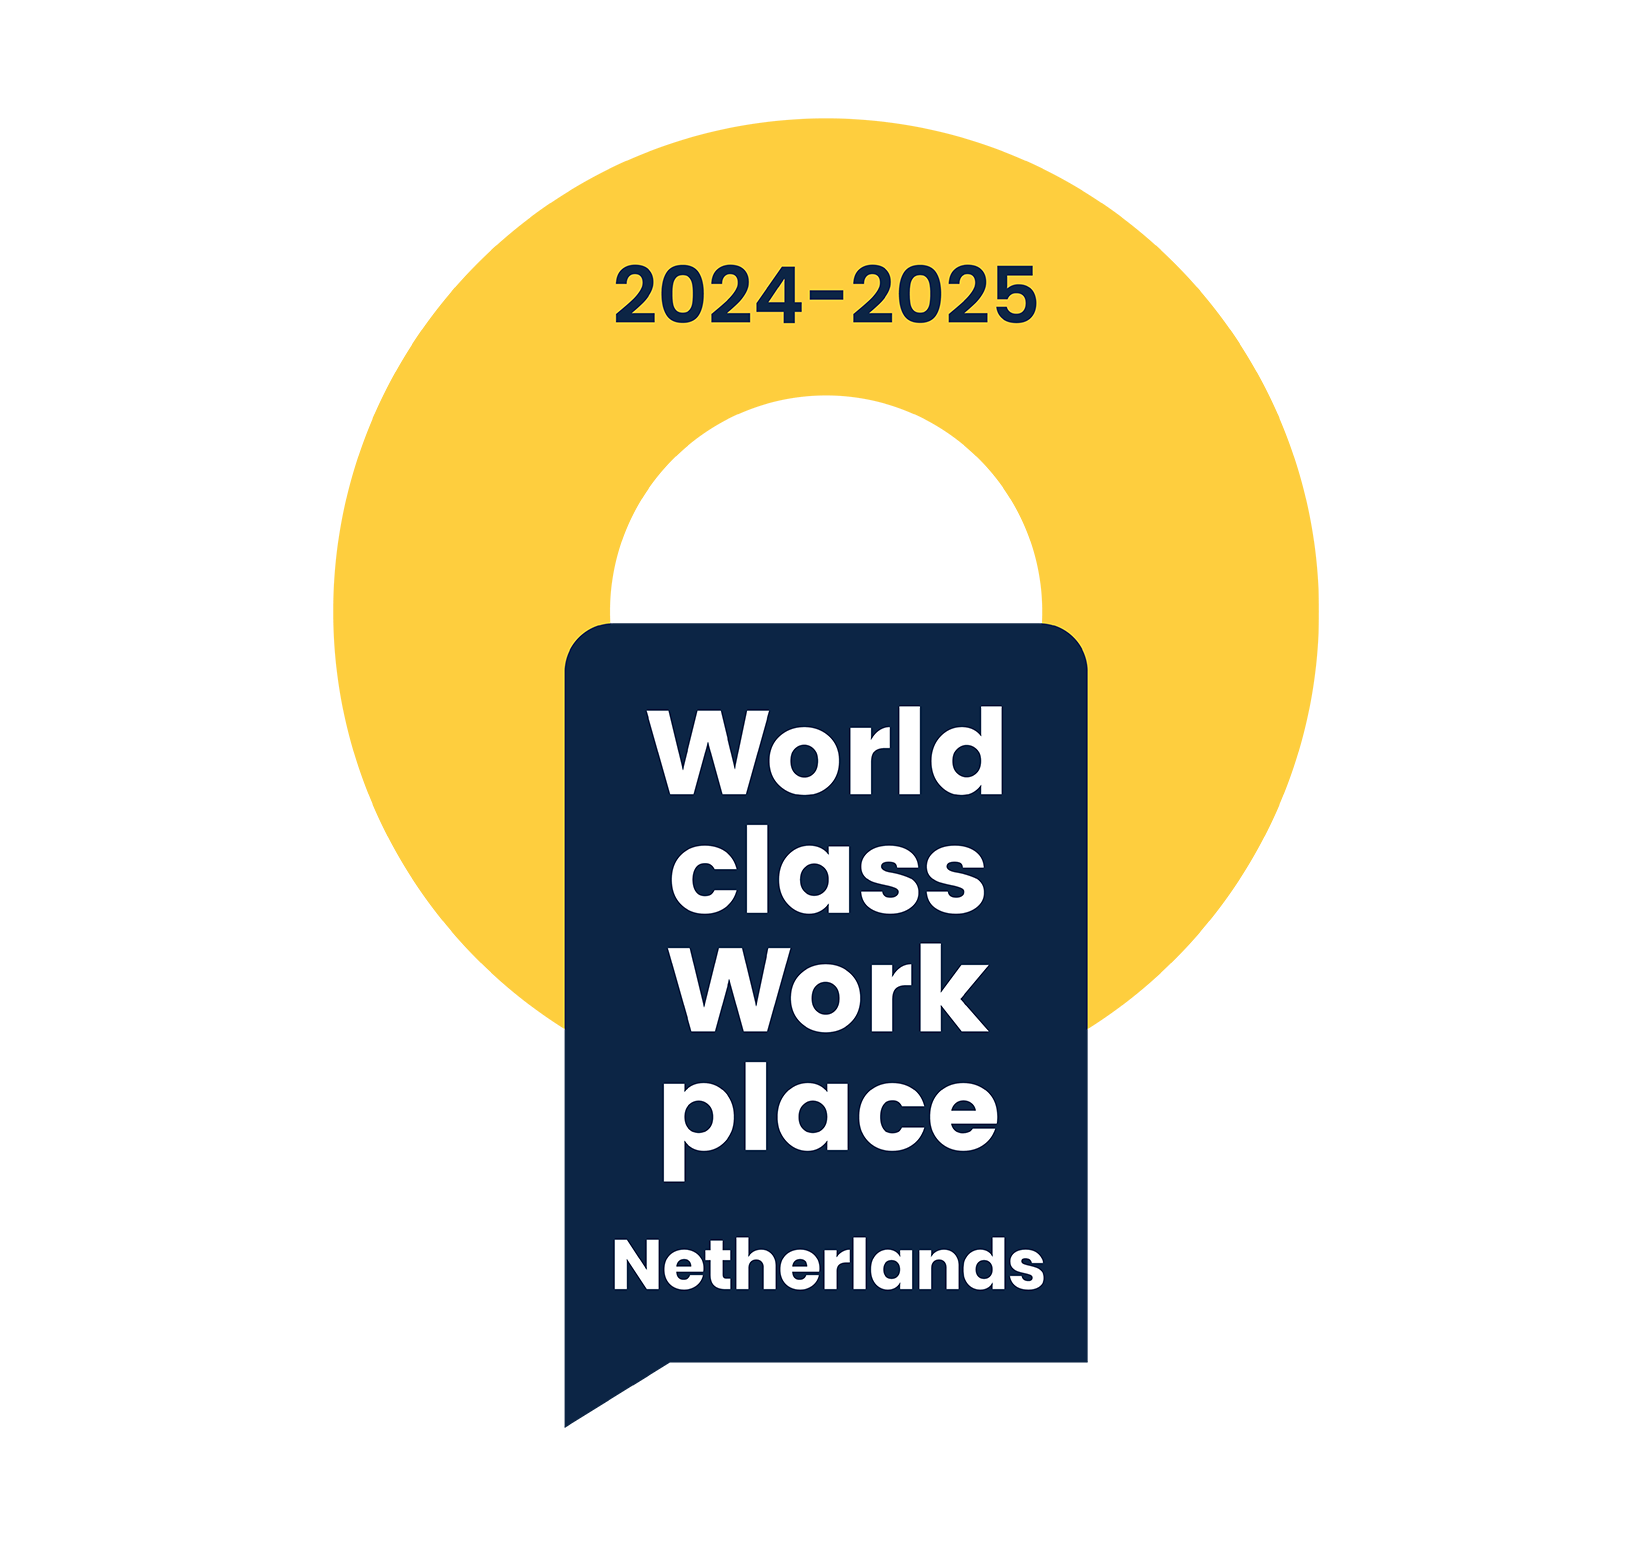 de Alliantie behoort tot World class workplace 2024-2025